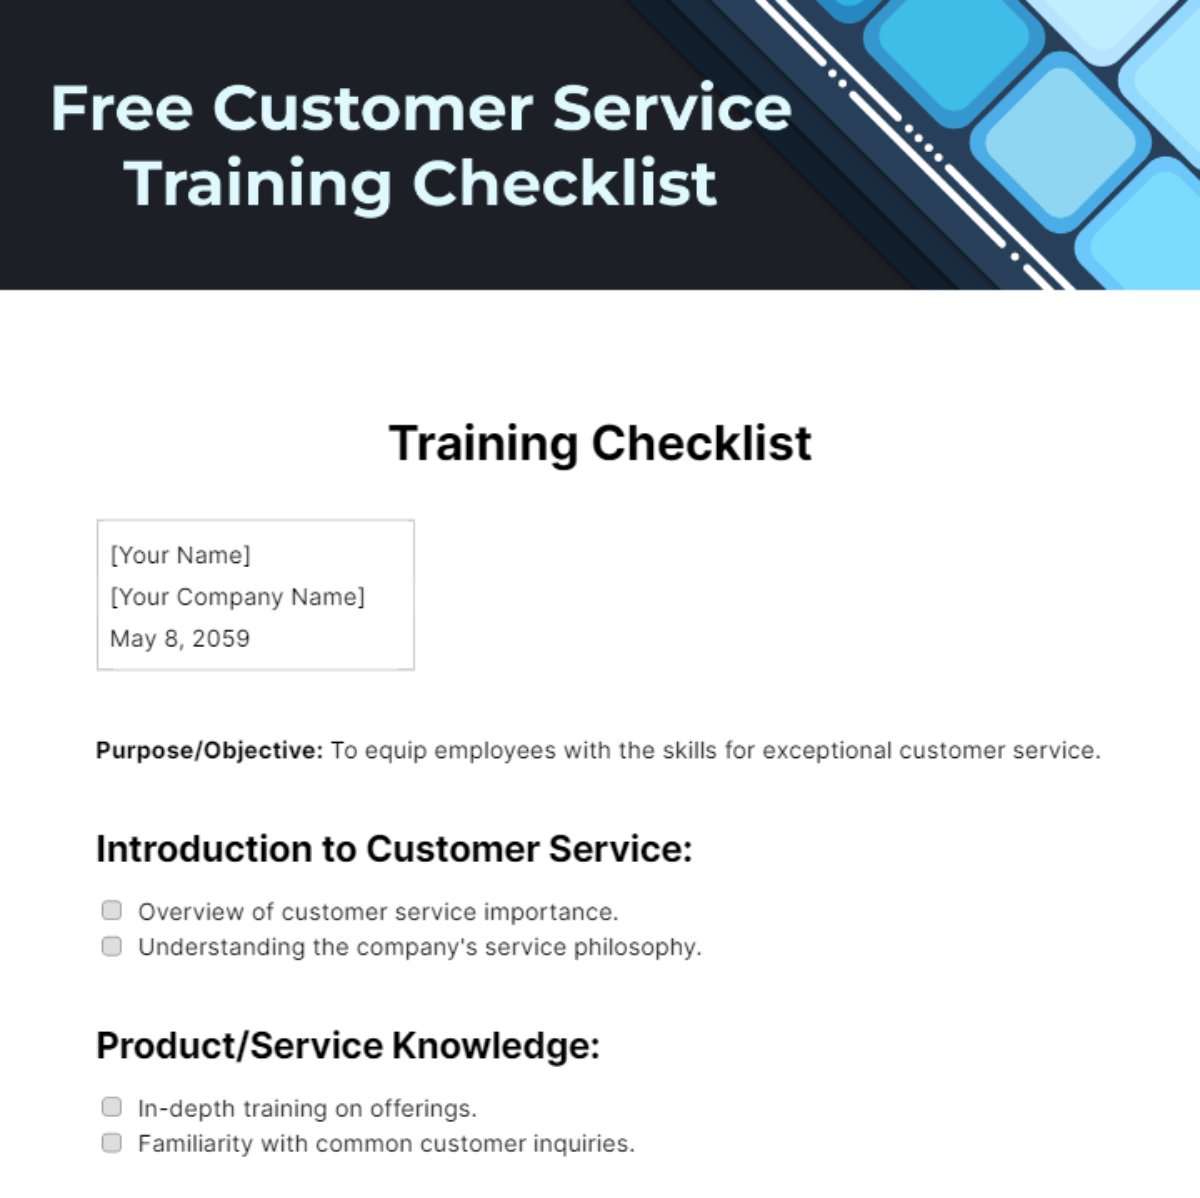 Free Customer Service Training Checklist Template